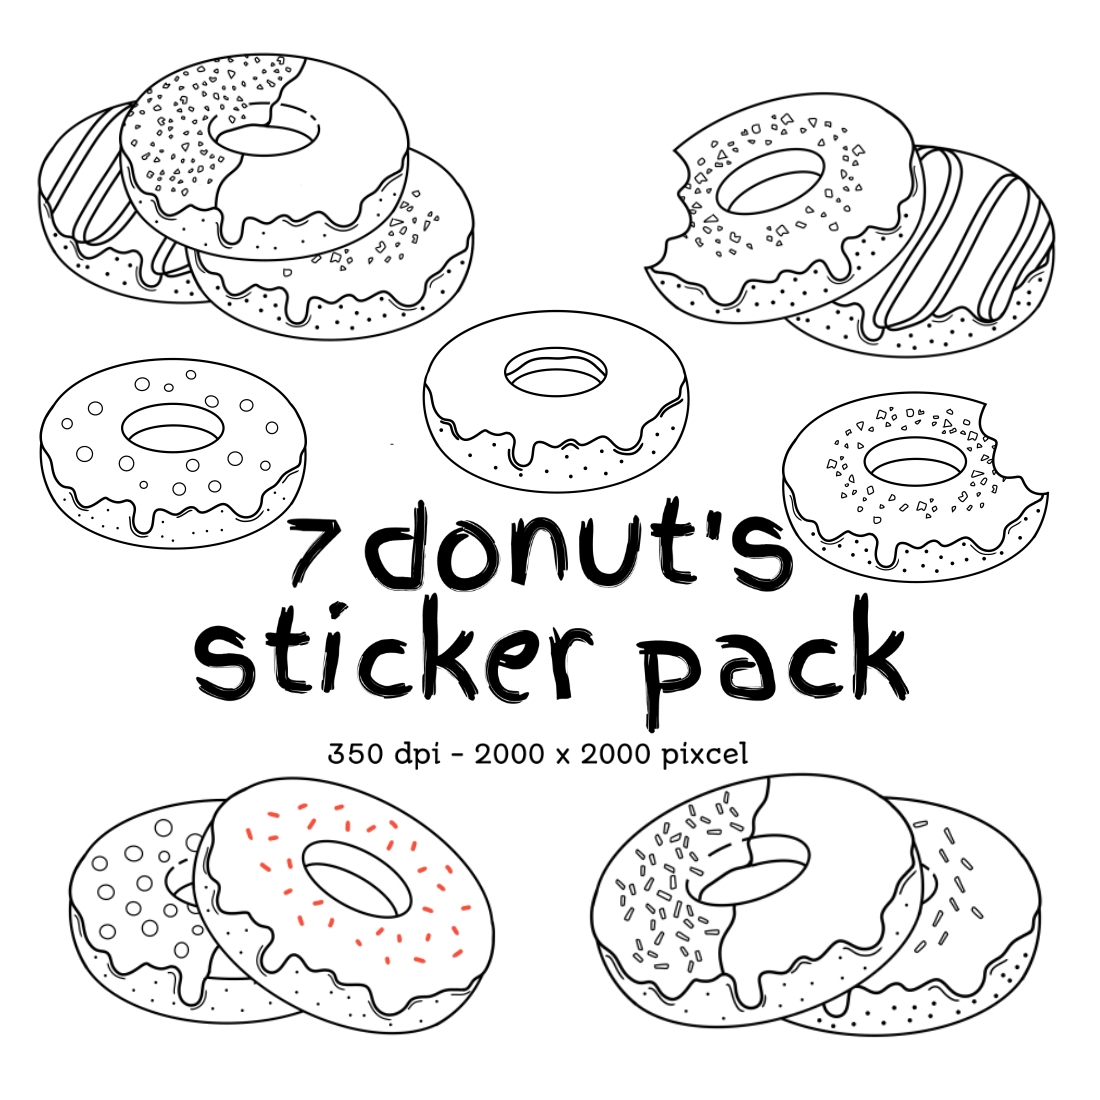 Donut Sticker Pack Line Art cover image.